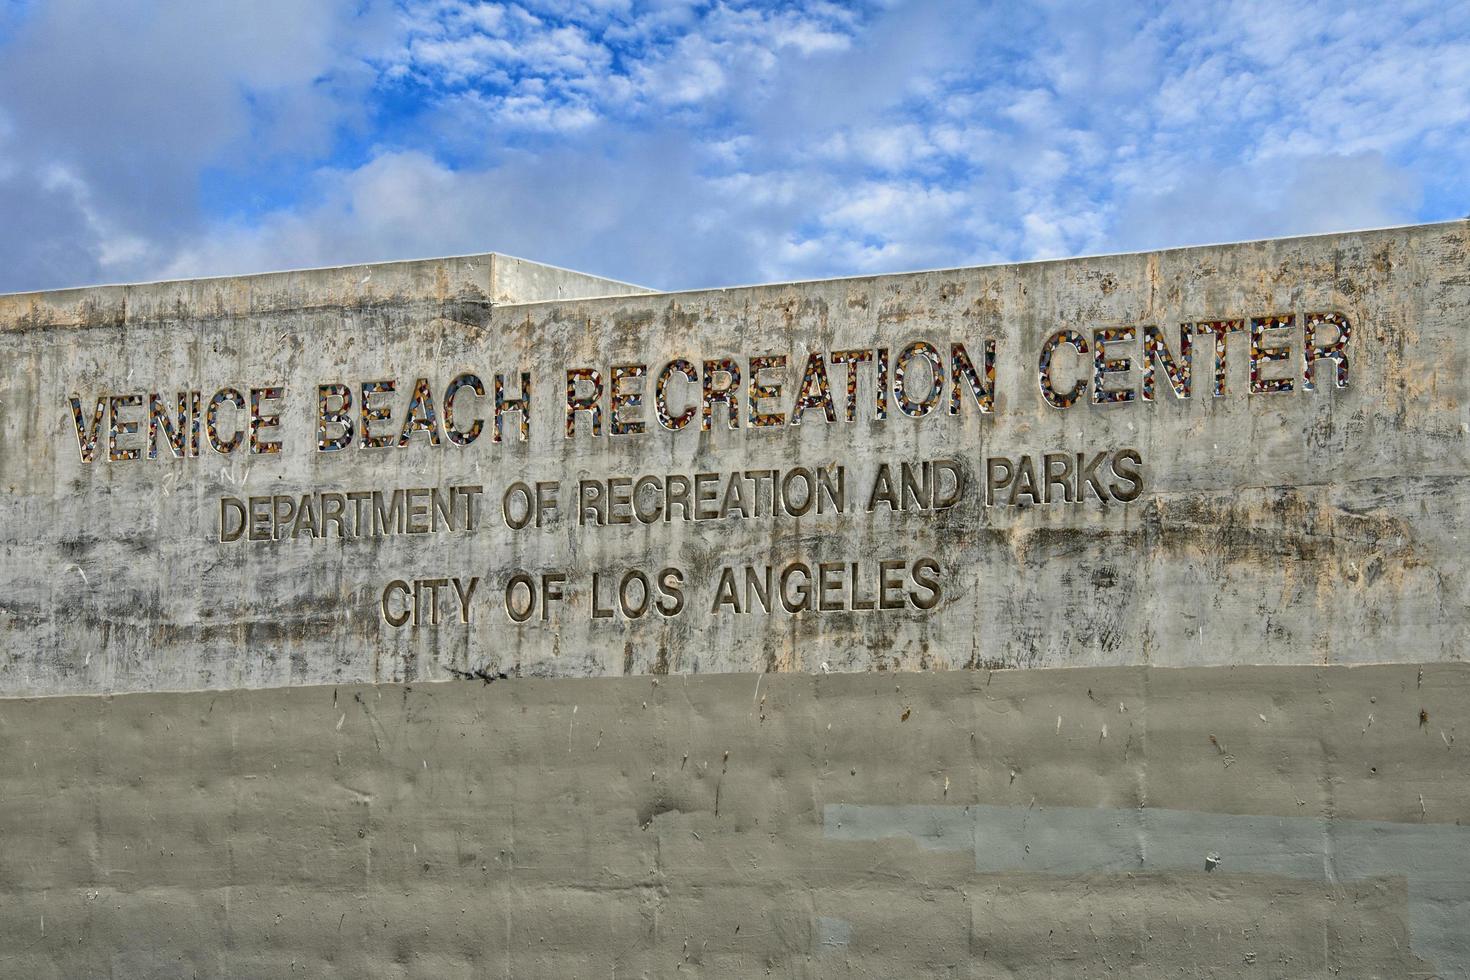 los angeles venice beach recreation center, 2022 photo